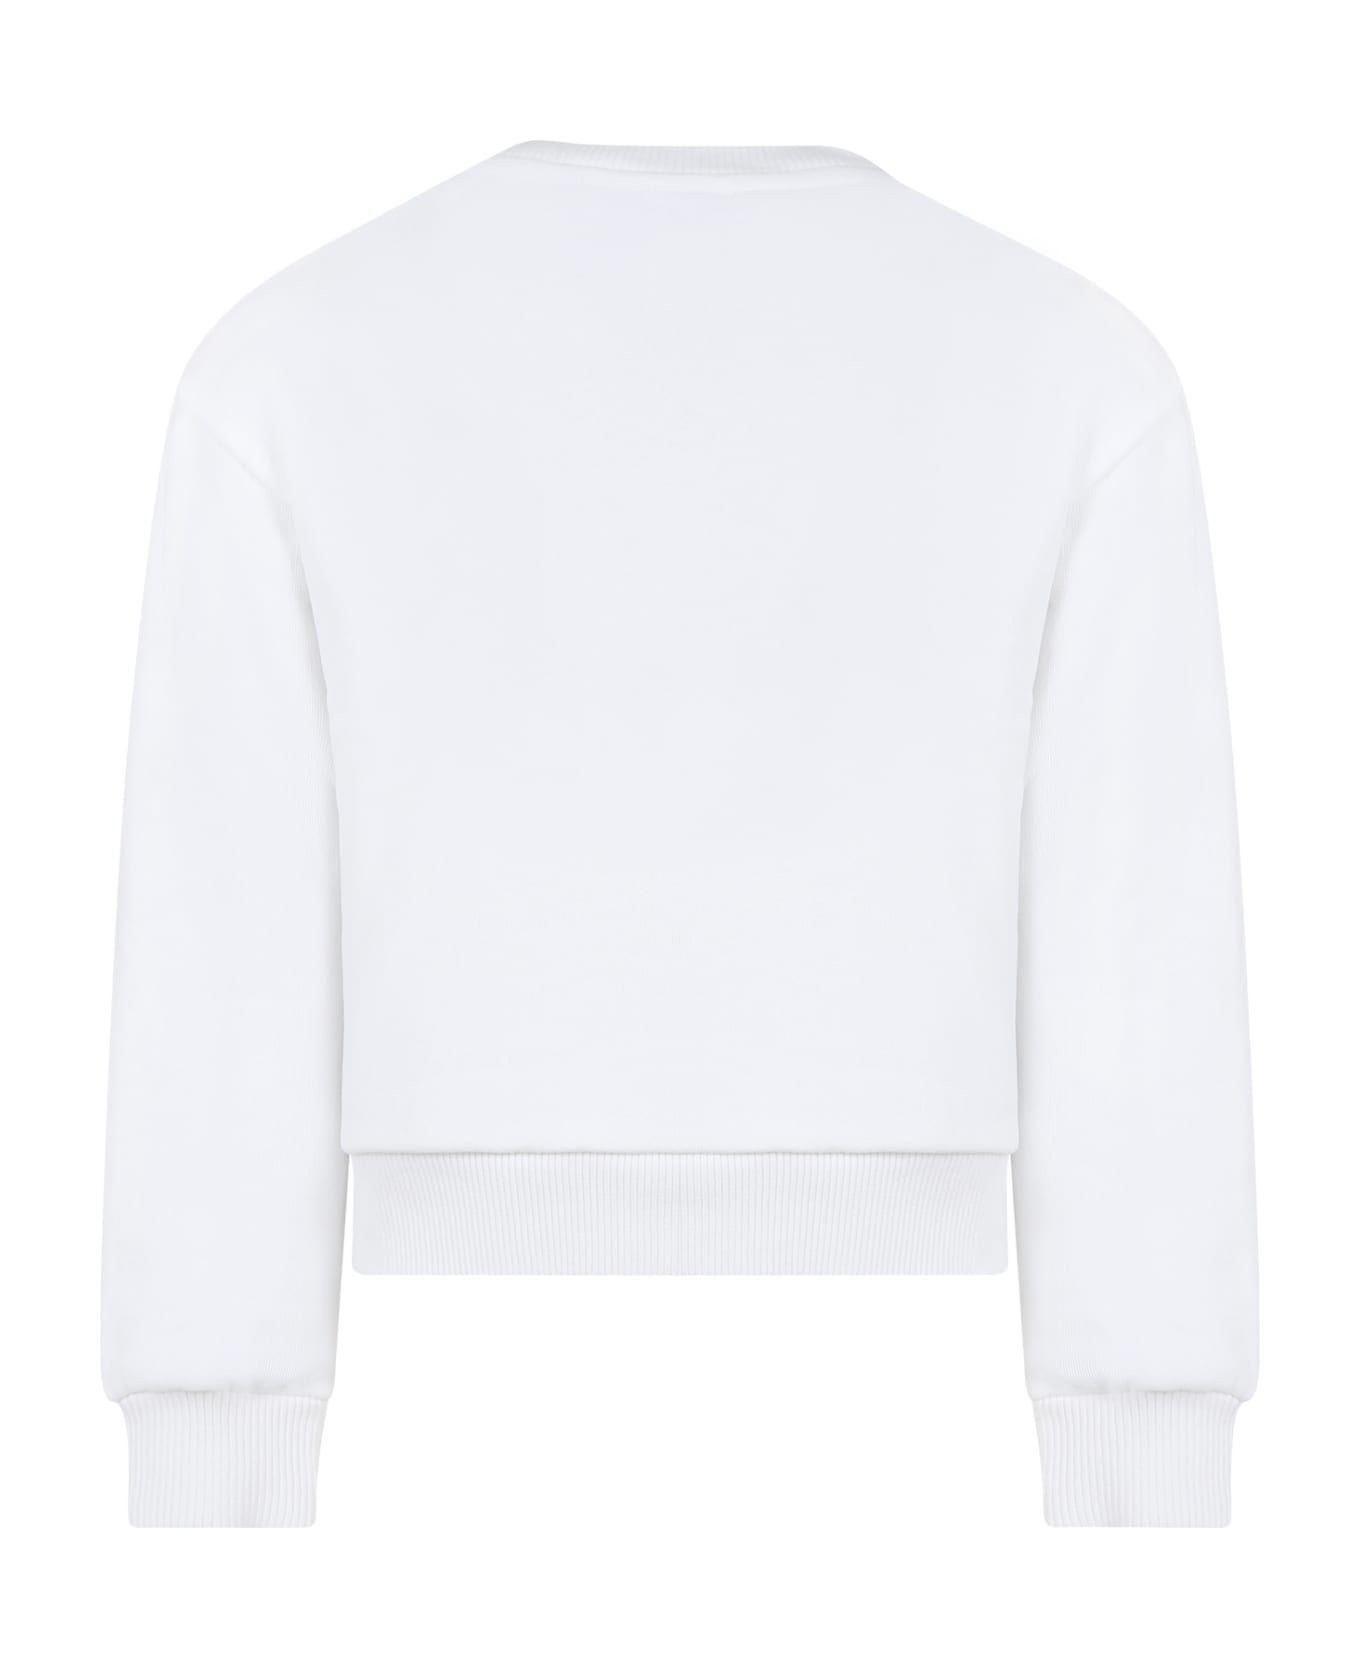 Dolce & Gabbana Whit Sweatshirt For Kids With Iconic Monogram